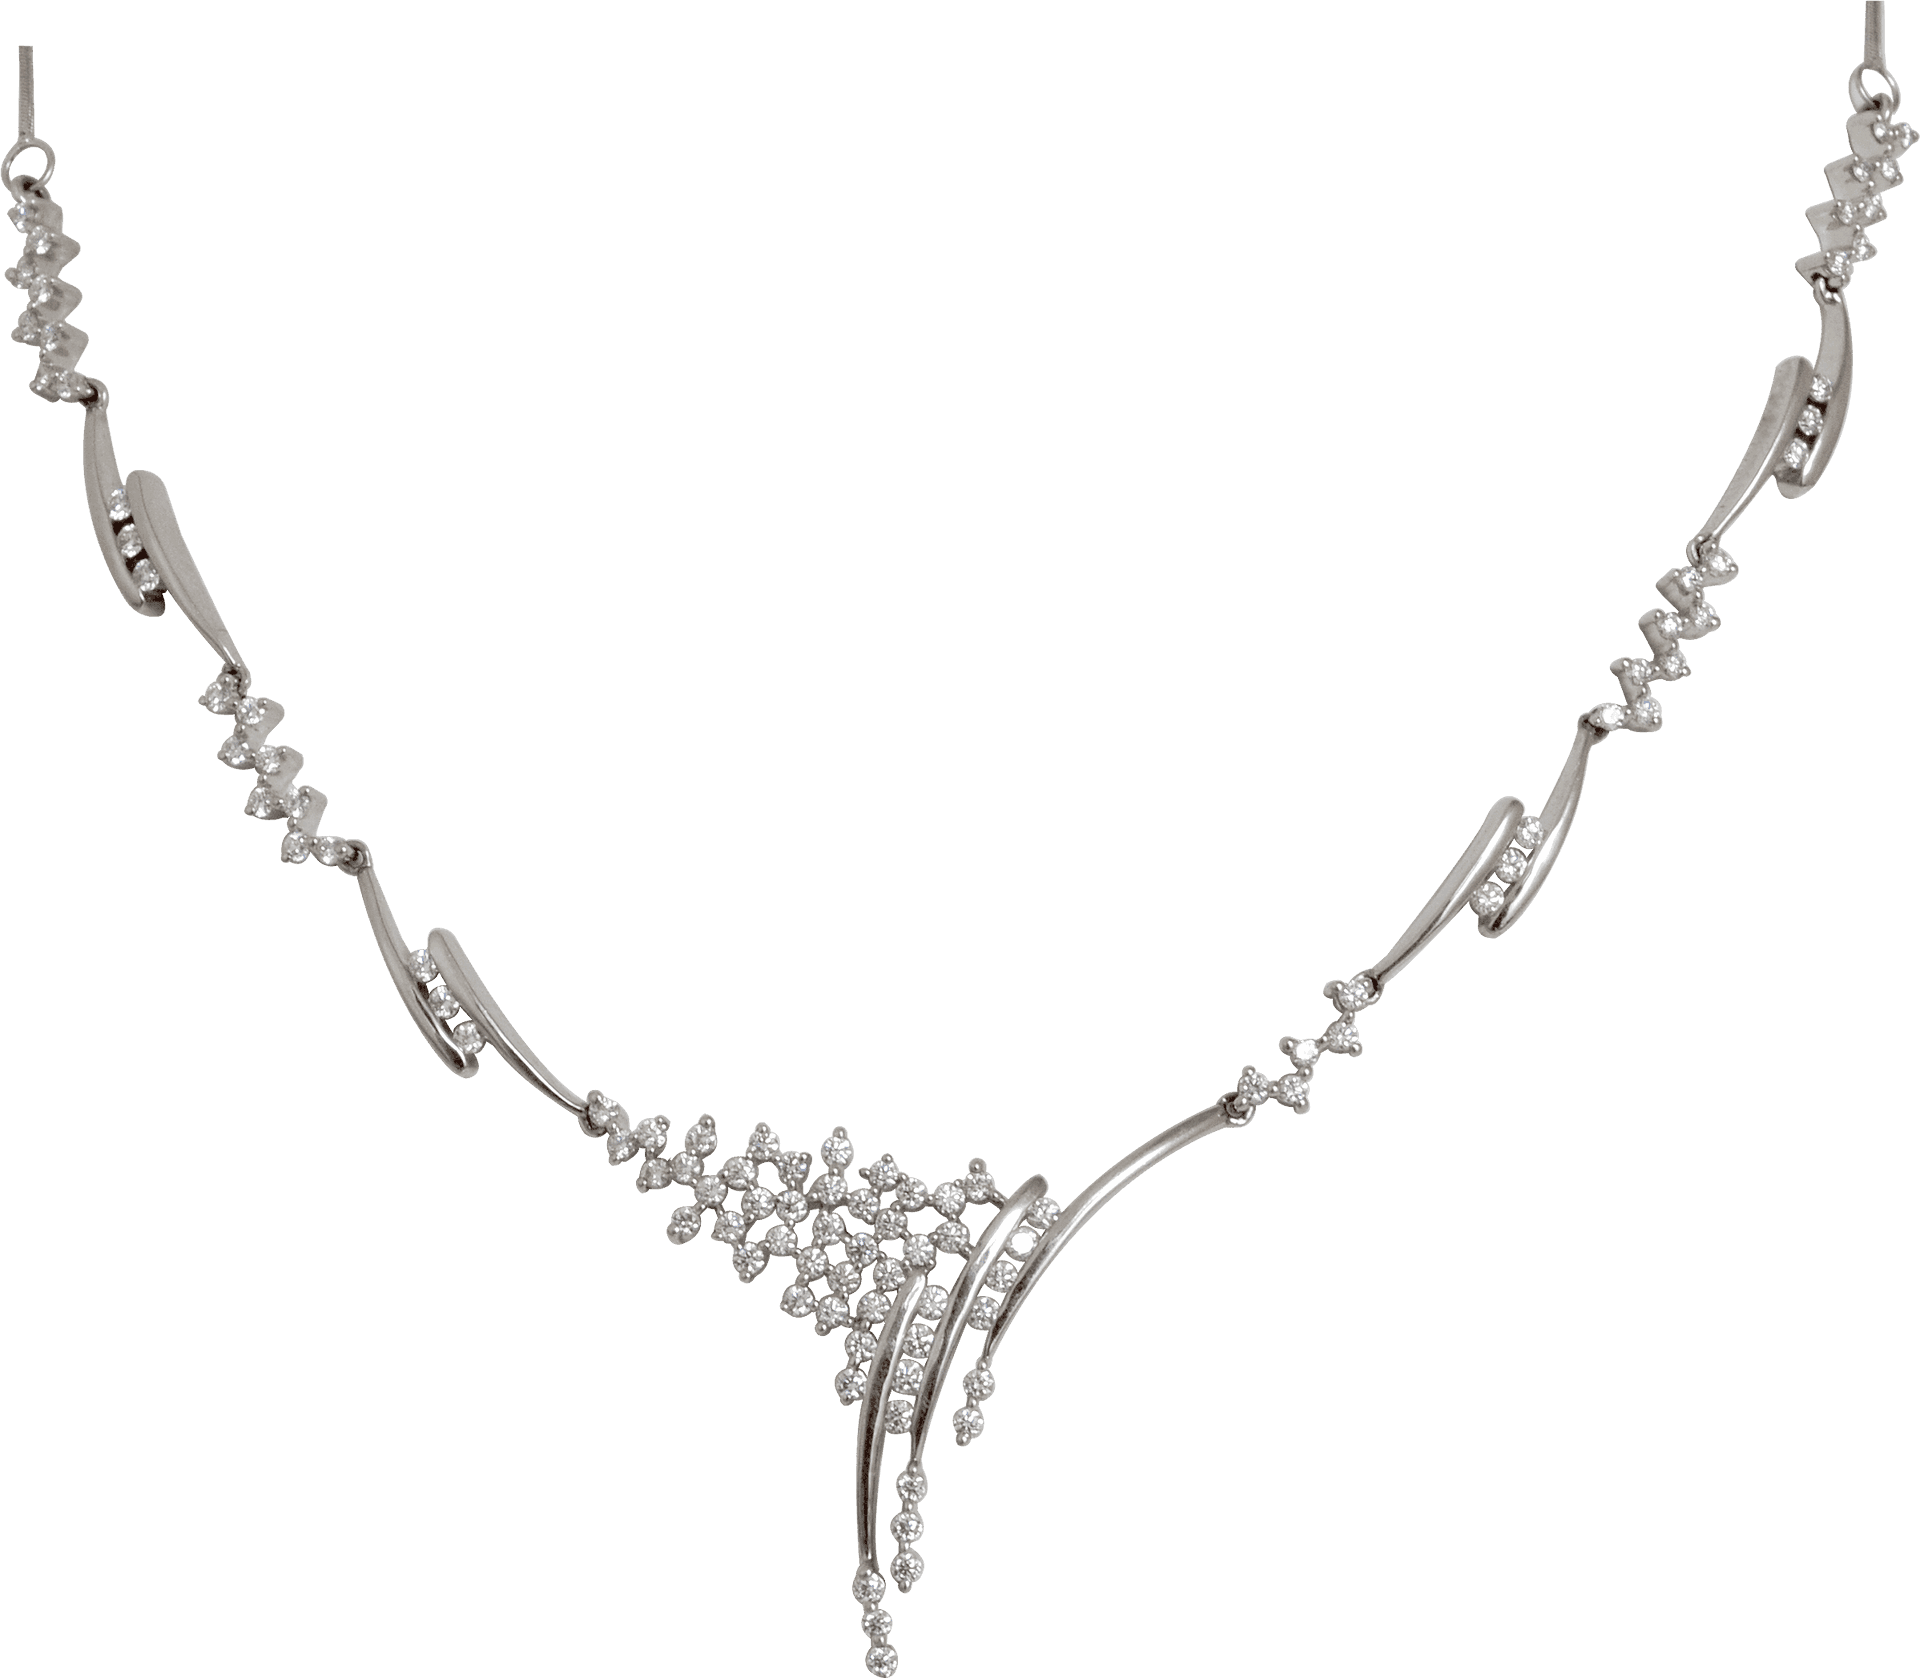 Elegant Diamond Necklace Design PNG